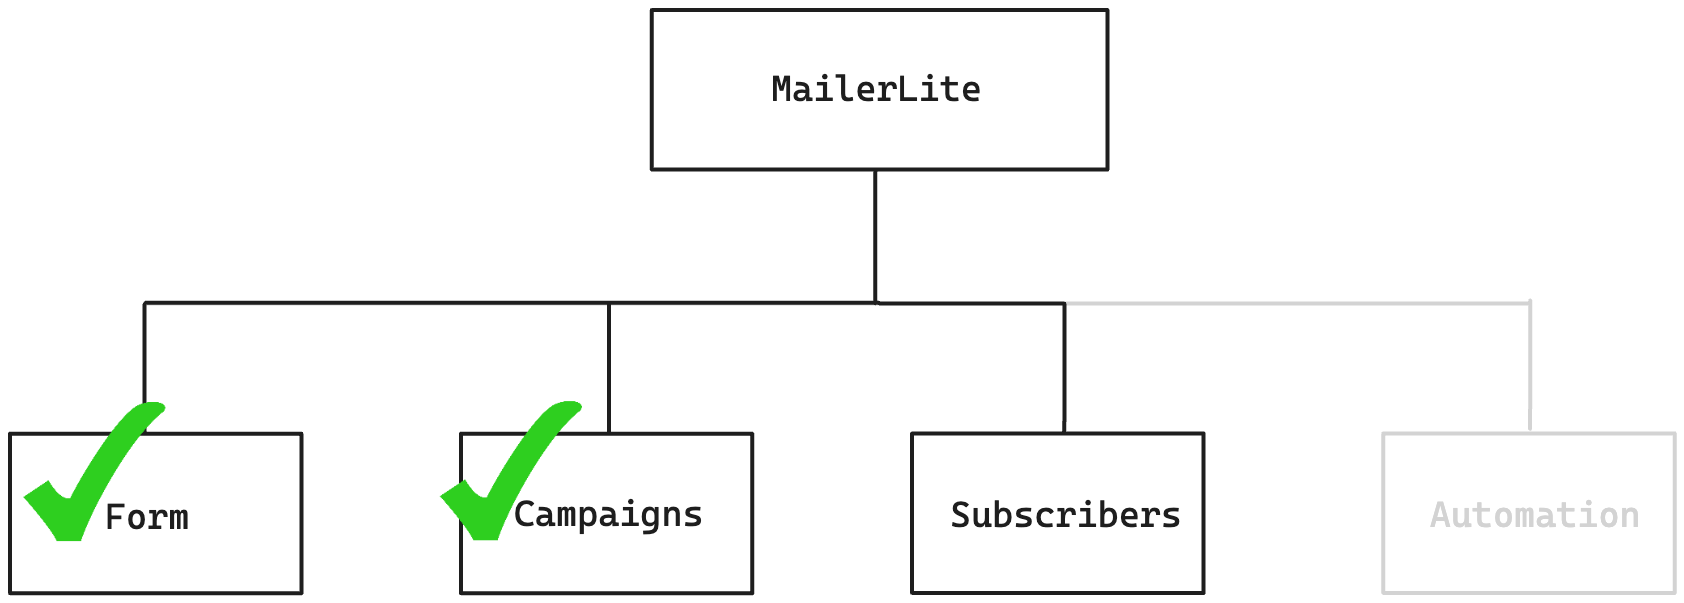 MailerLite 四大模塊，已經講解完 Form 跟 Campaigns